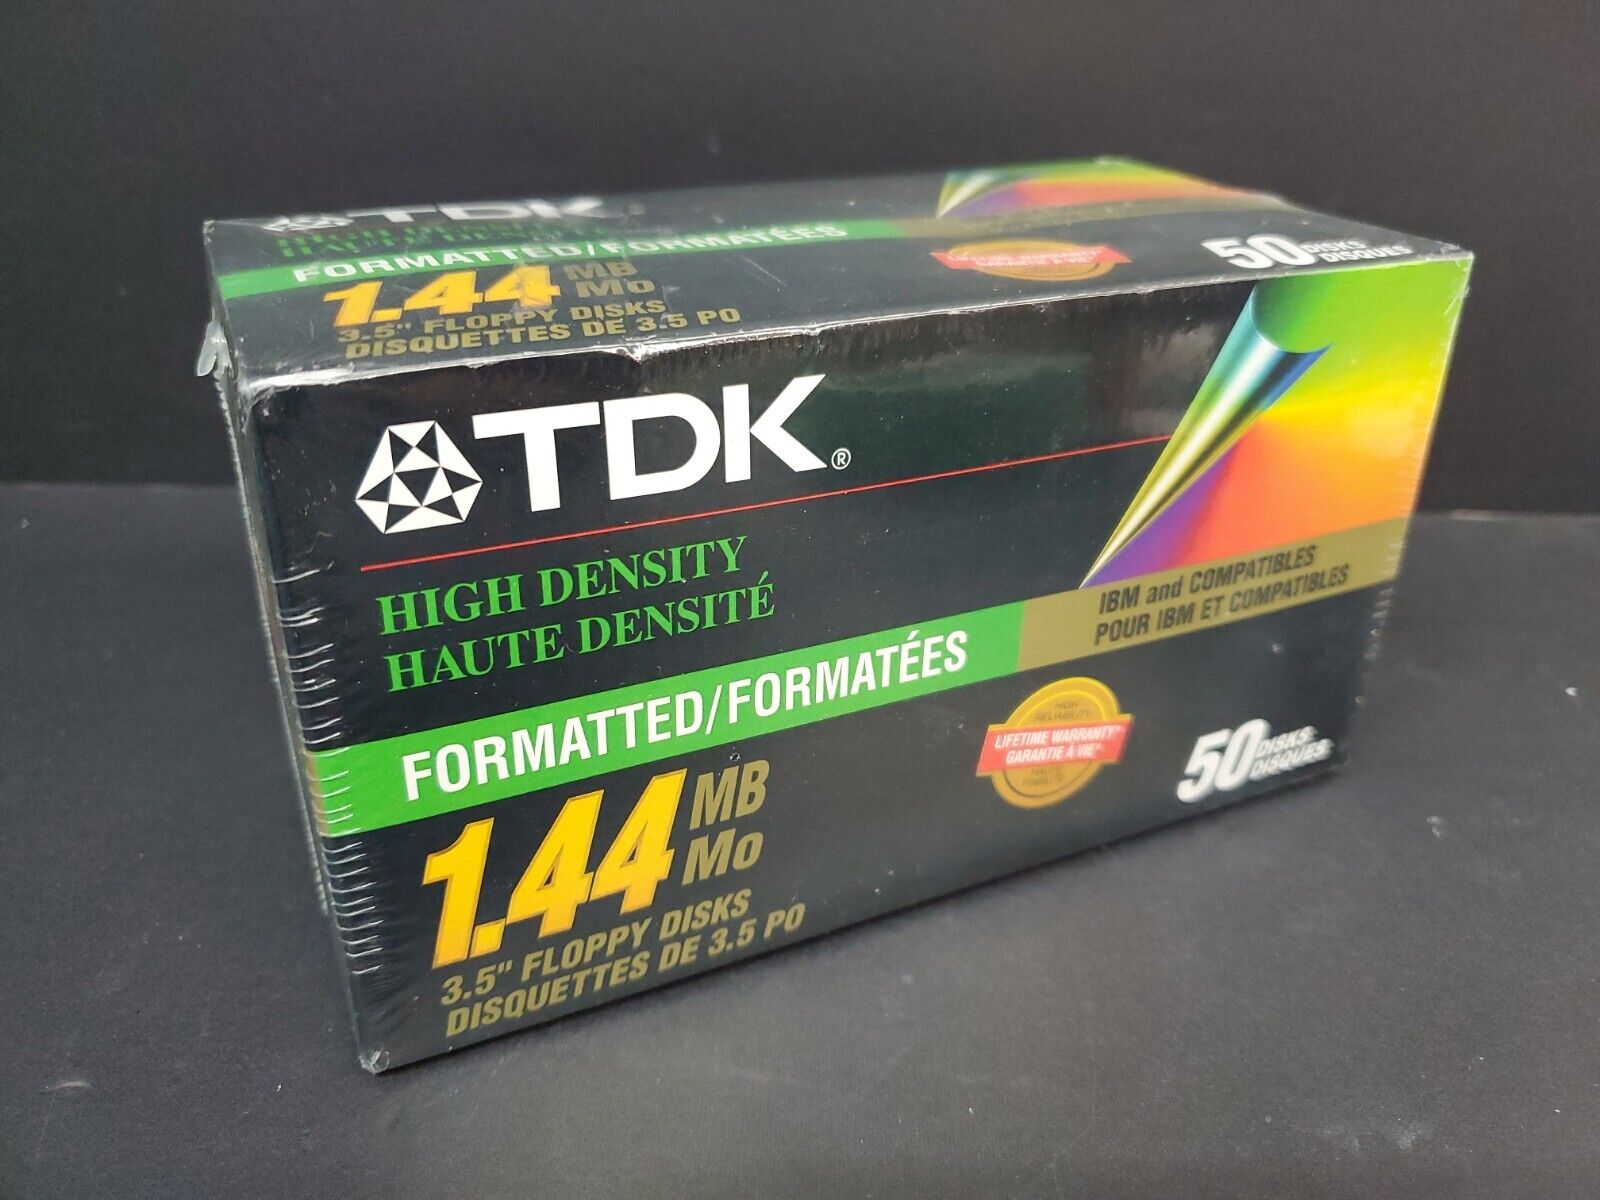 TDK High Density 1.44 MB Formatted for IBM & Compatibles 50-pack SEALED New